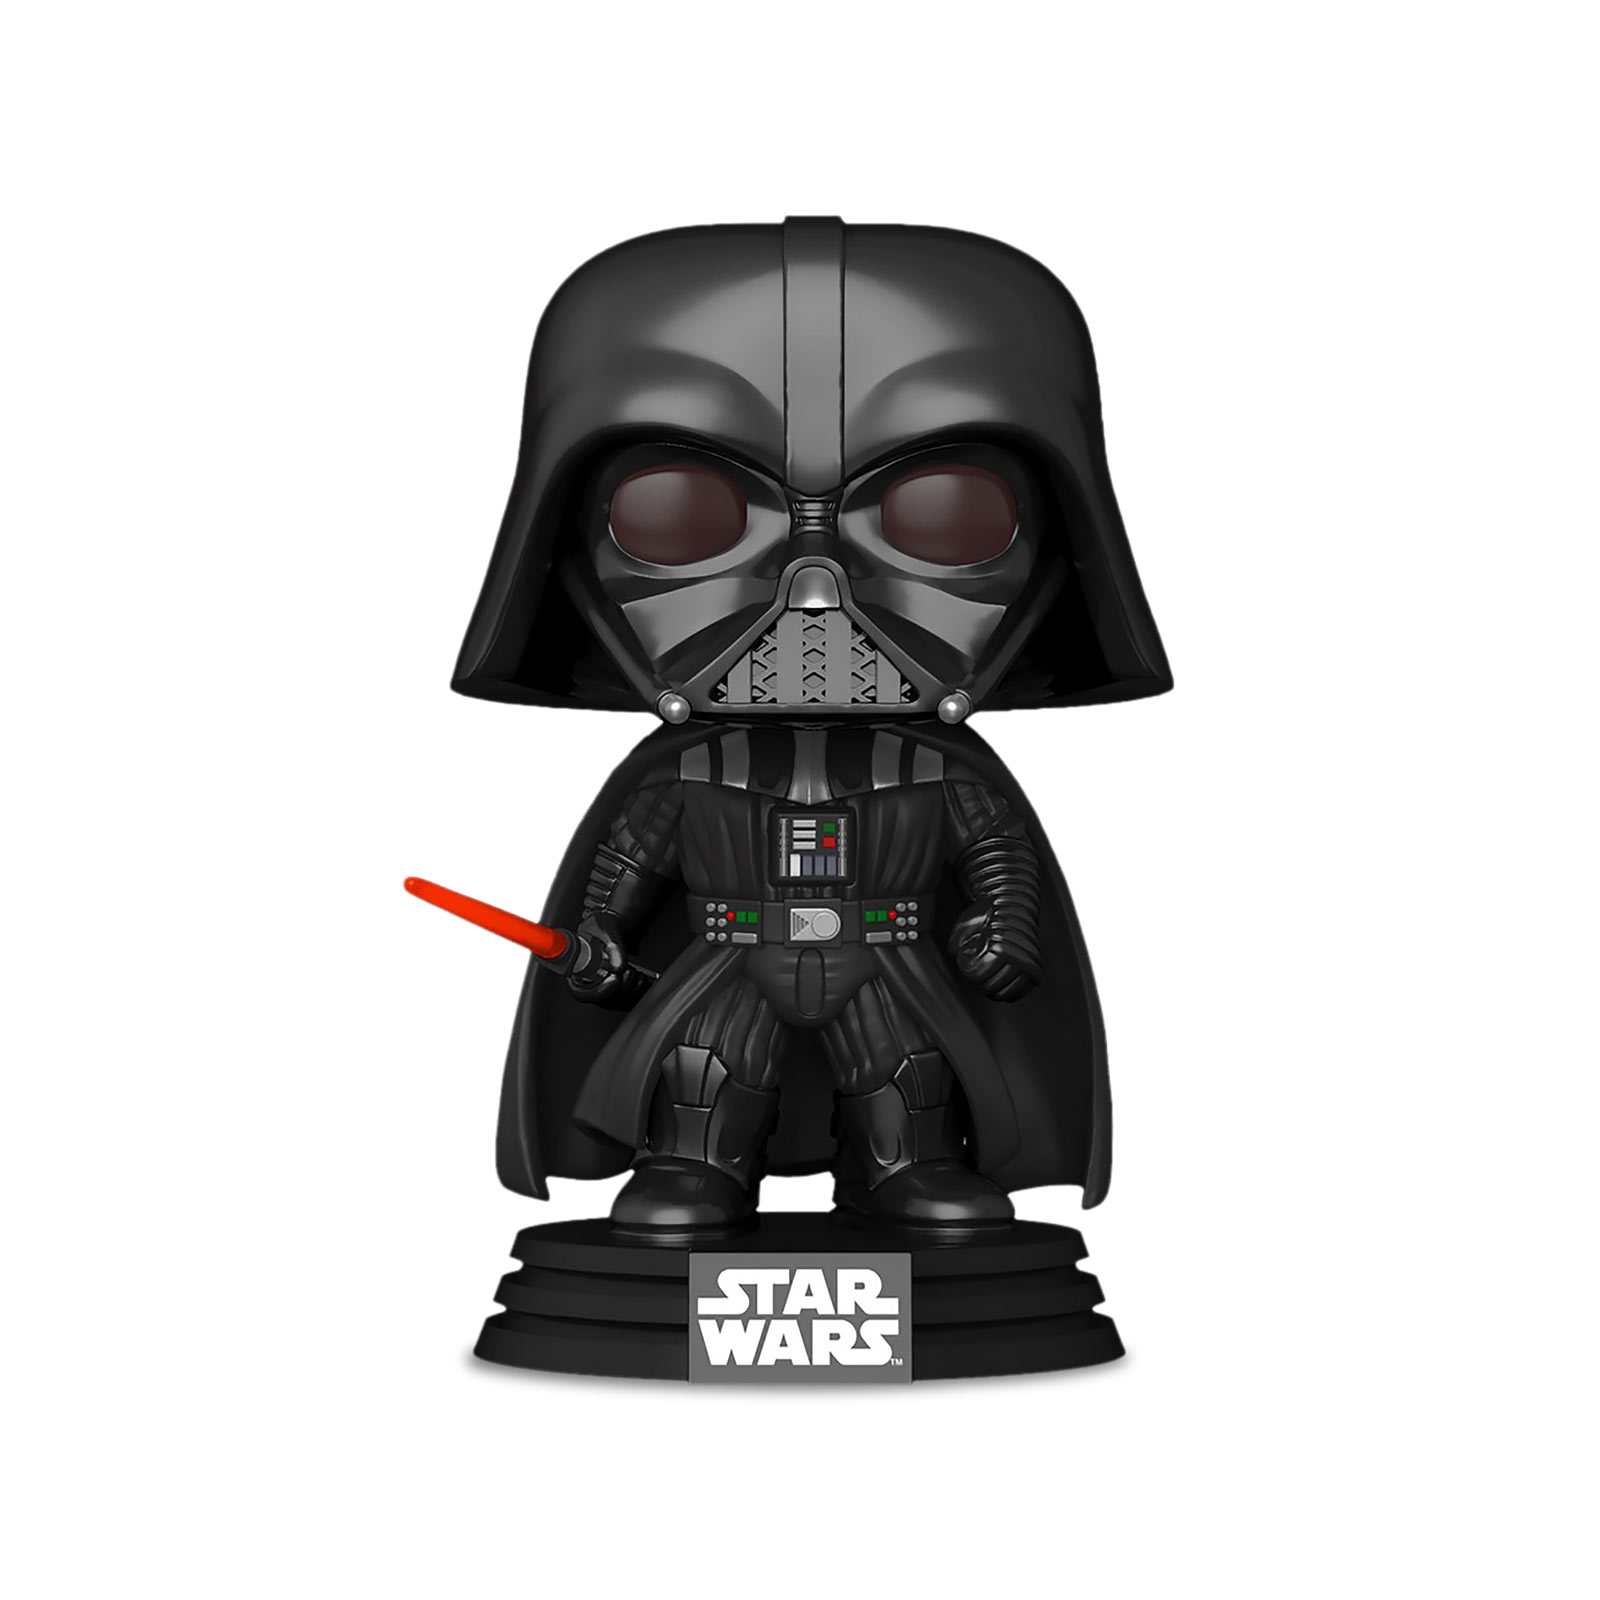 Darth Vader Funko Pop Bobblehead Figure - Star Wars